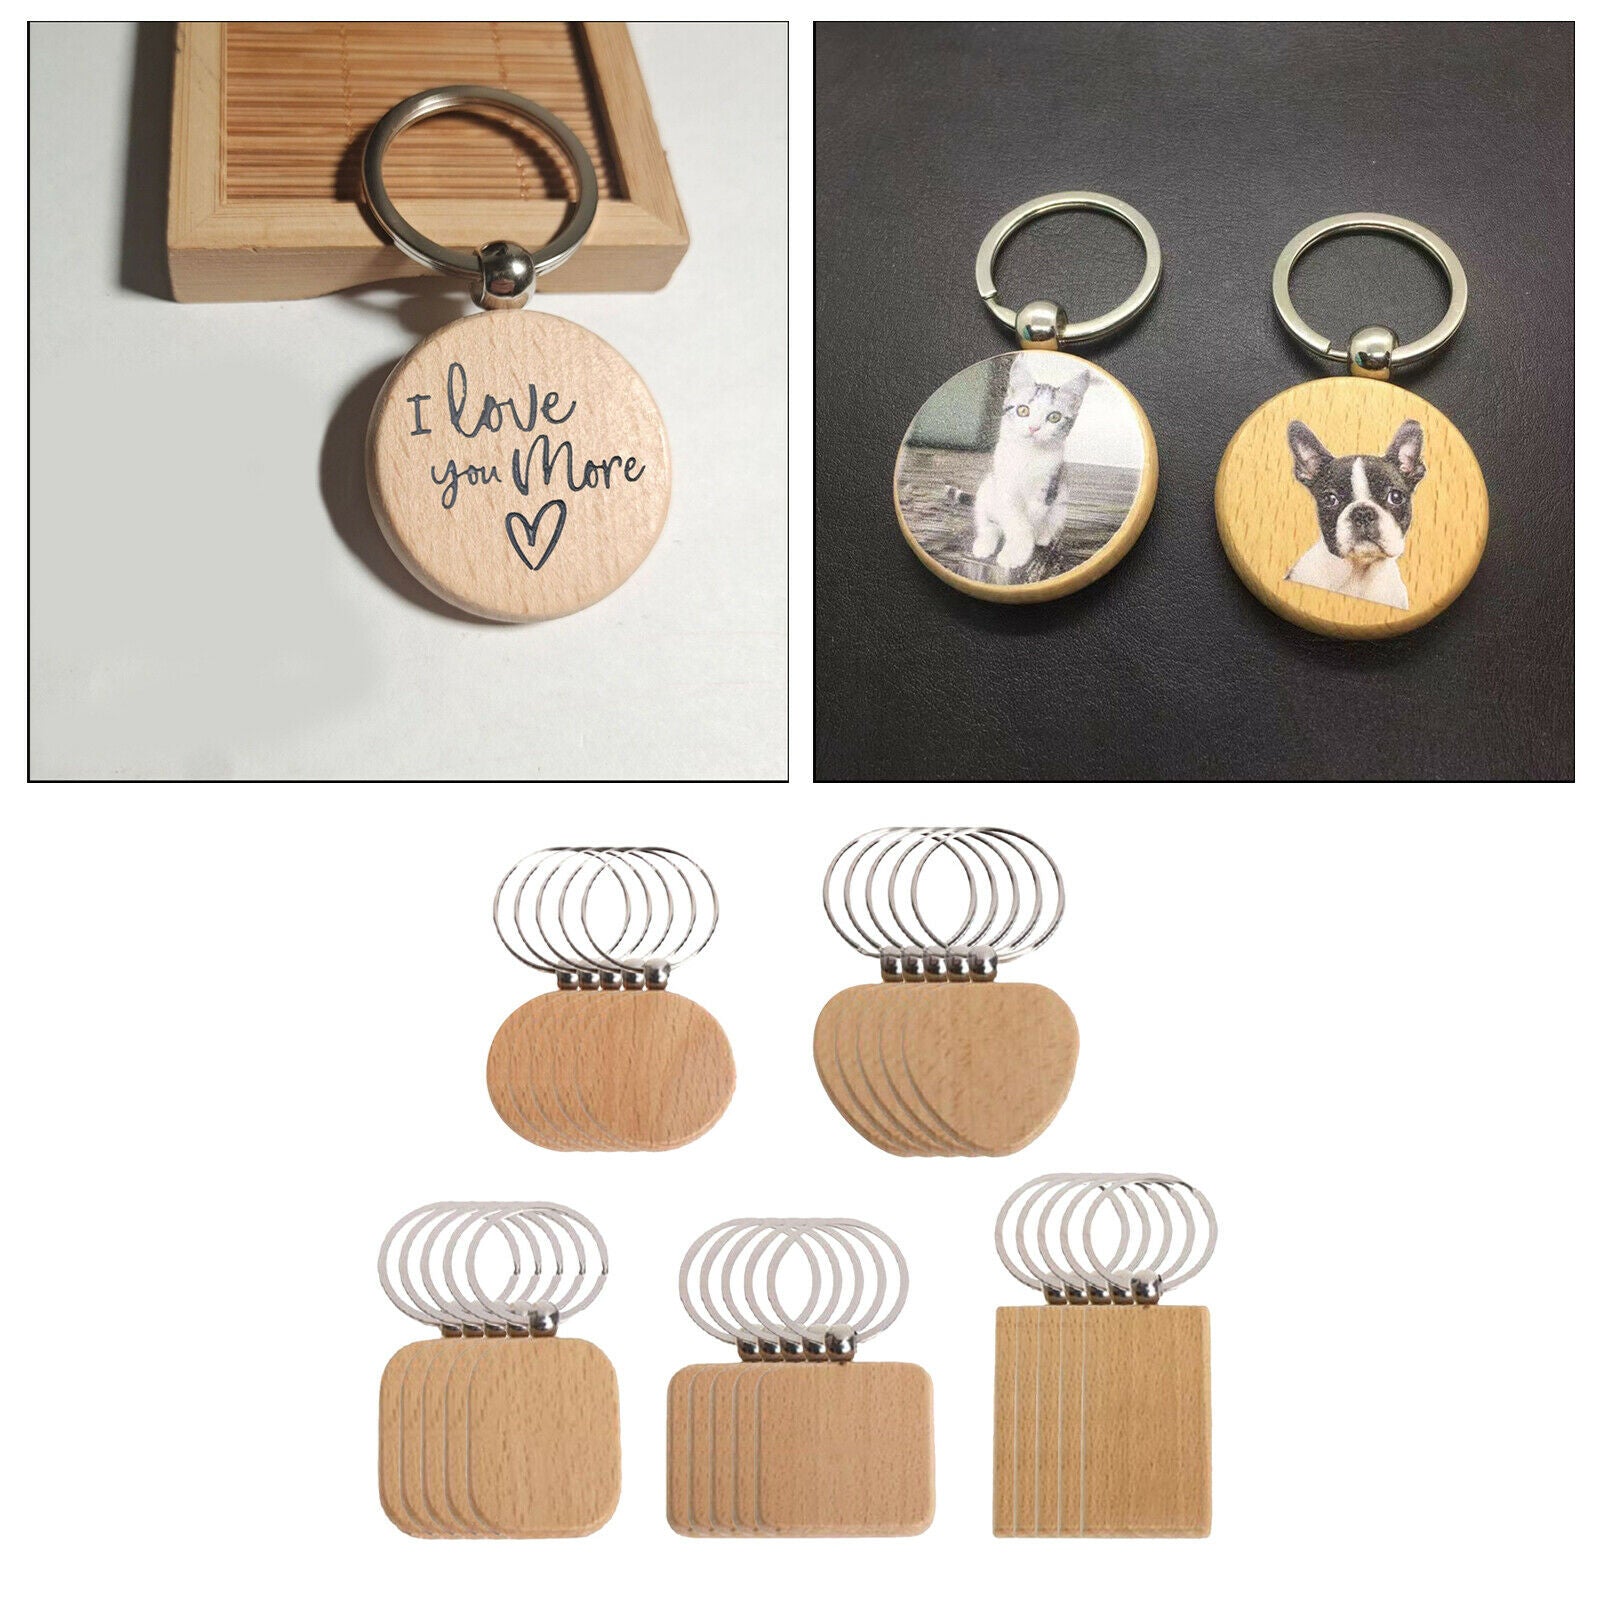 Pack of 25 Blank Plain Wooden Key Chain Wood Keychain Car Bag Charm Pendant